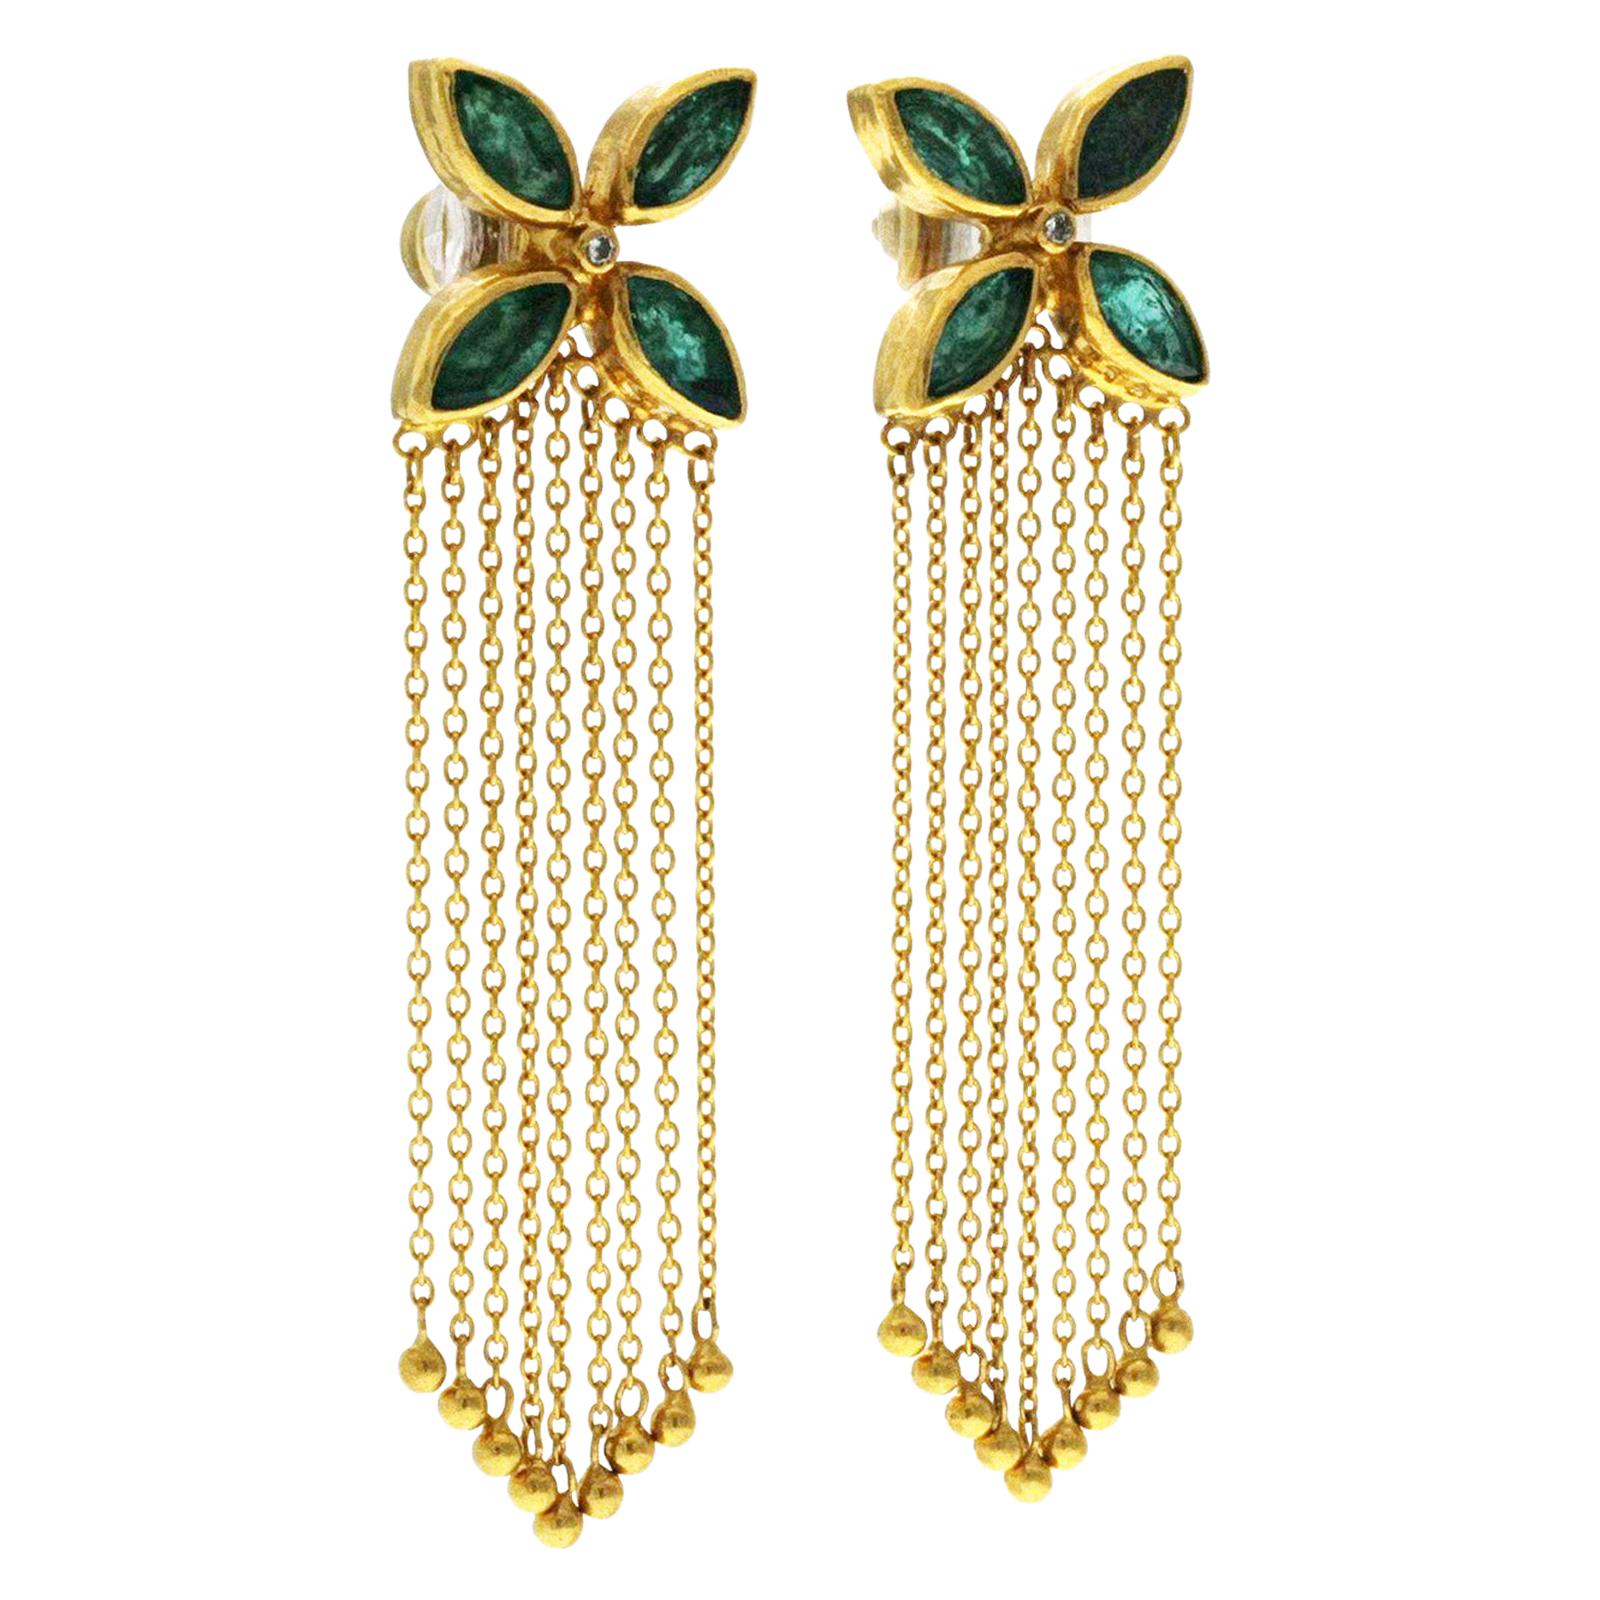 Authentic Gurhan "Tassel" 24 Karat Yellow Gold, Diamond and Emerald Earrings